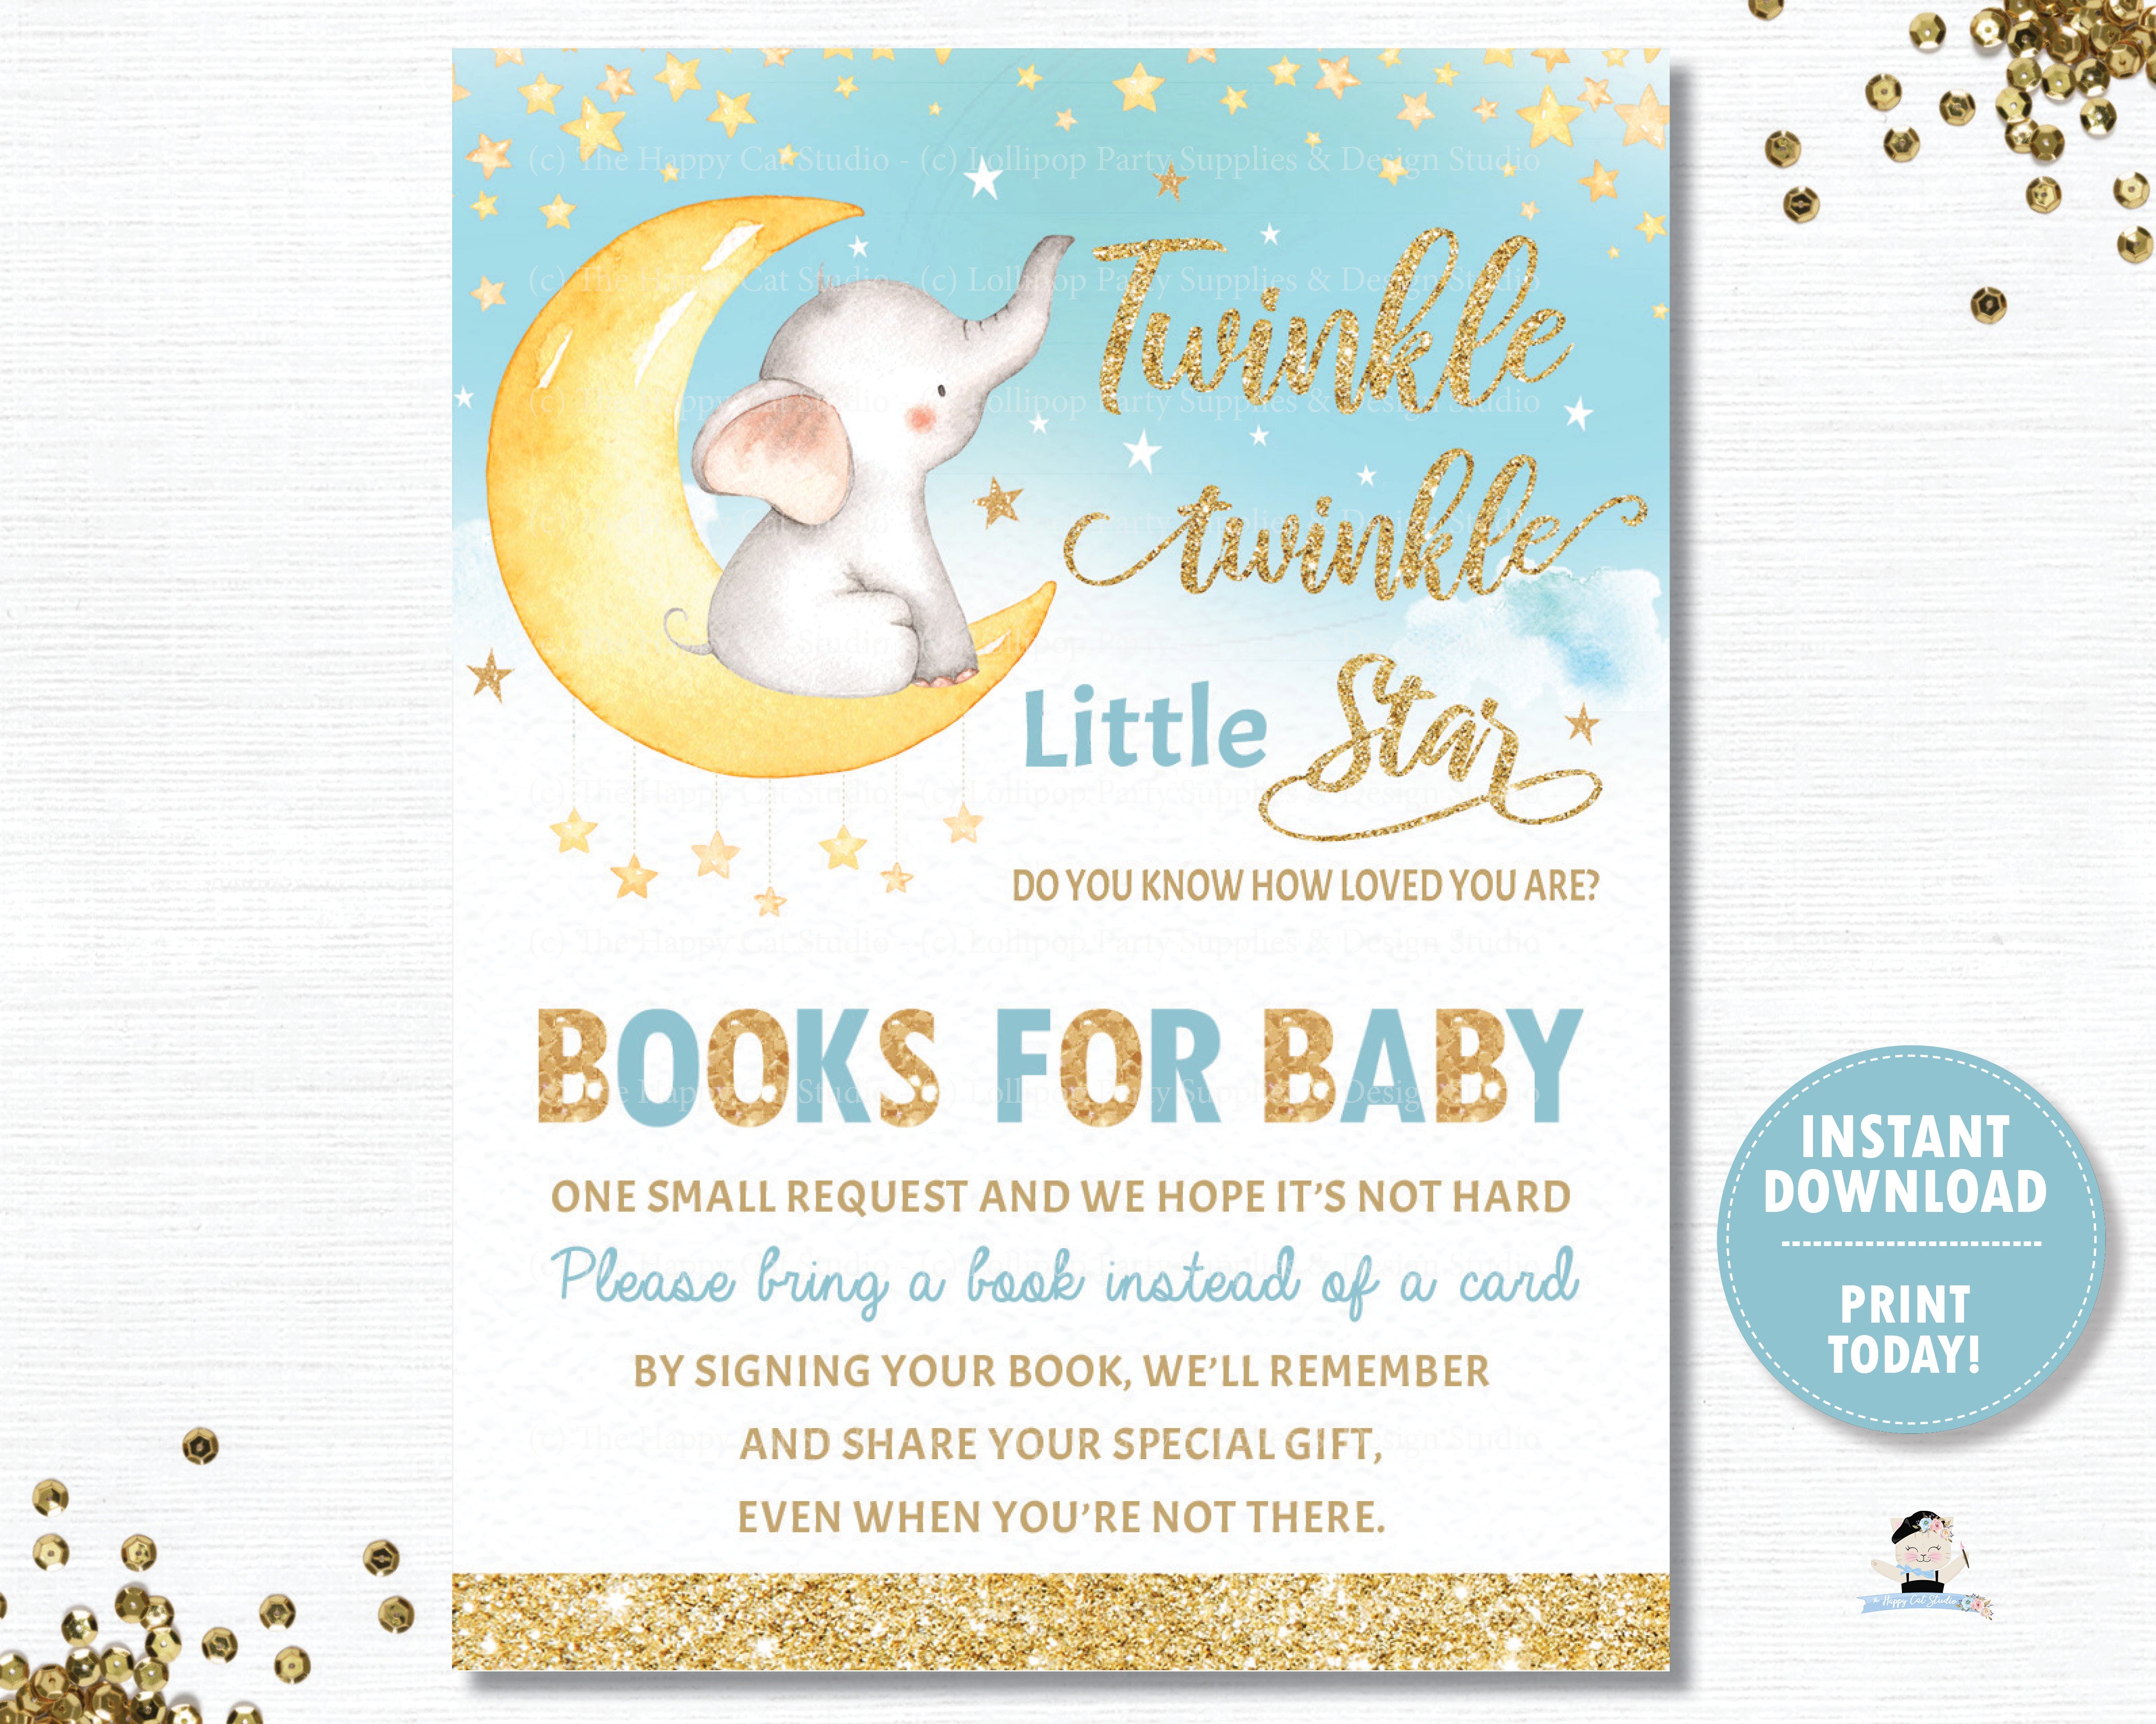 Printable Baby Scrapbook Stickers, Baby Journal